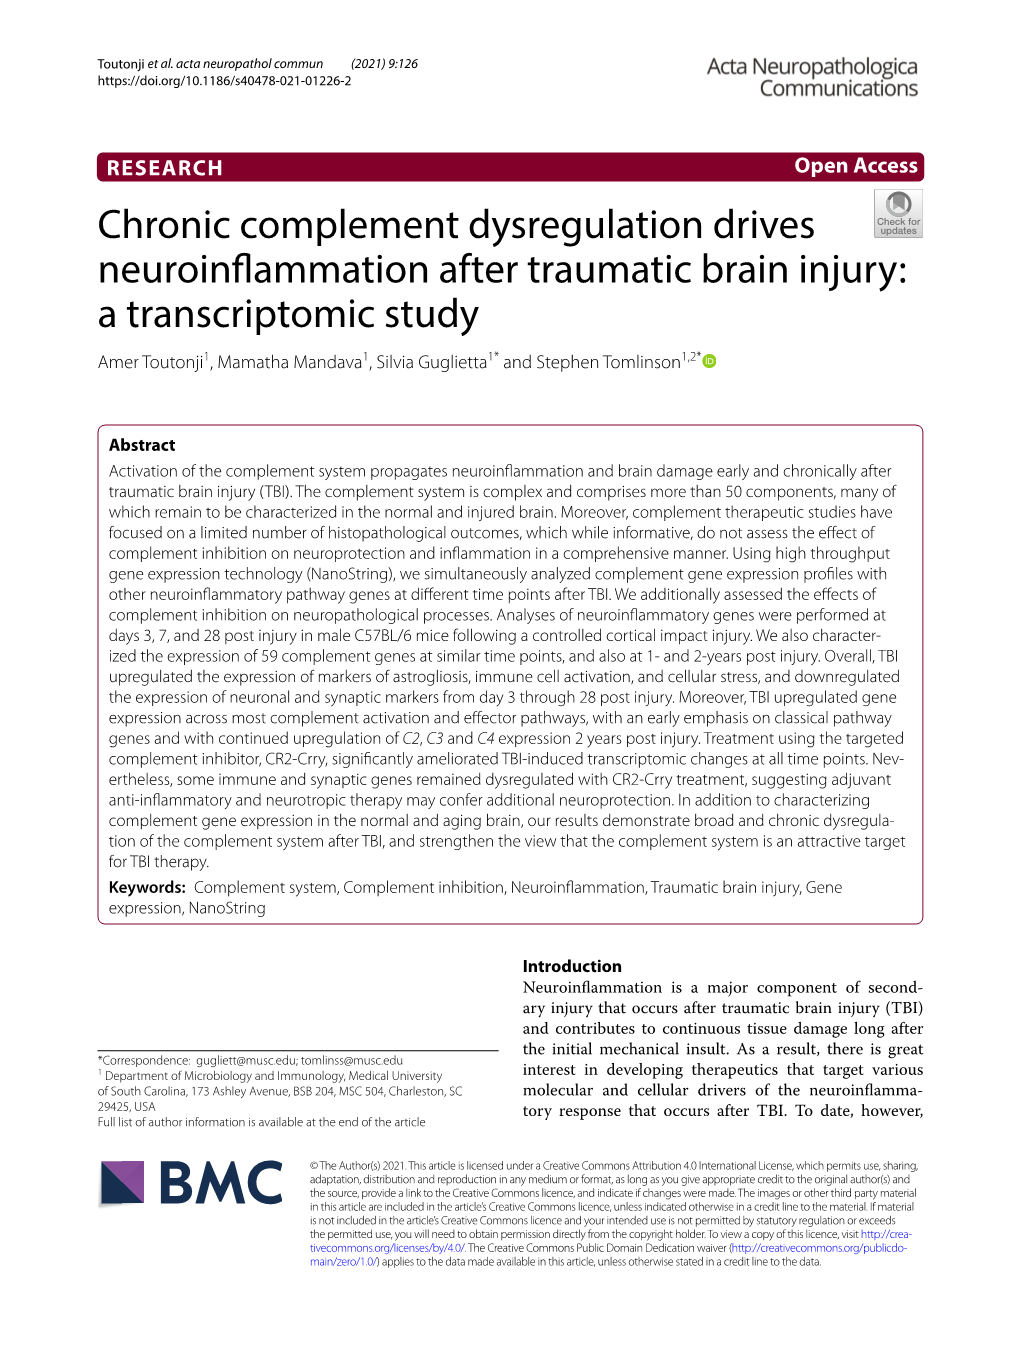 Chronic Complement Dysregulation Drives Neuroinflammation After